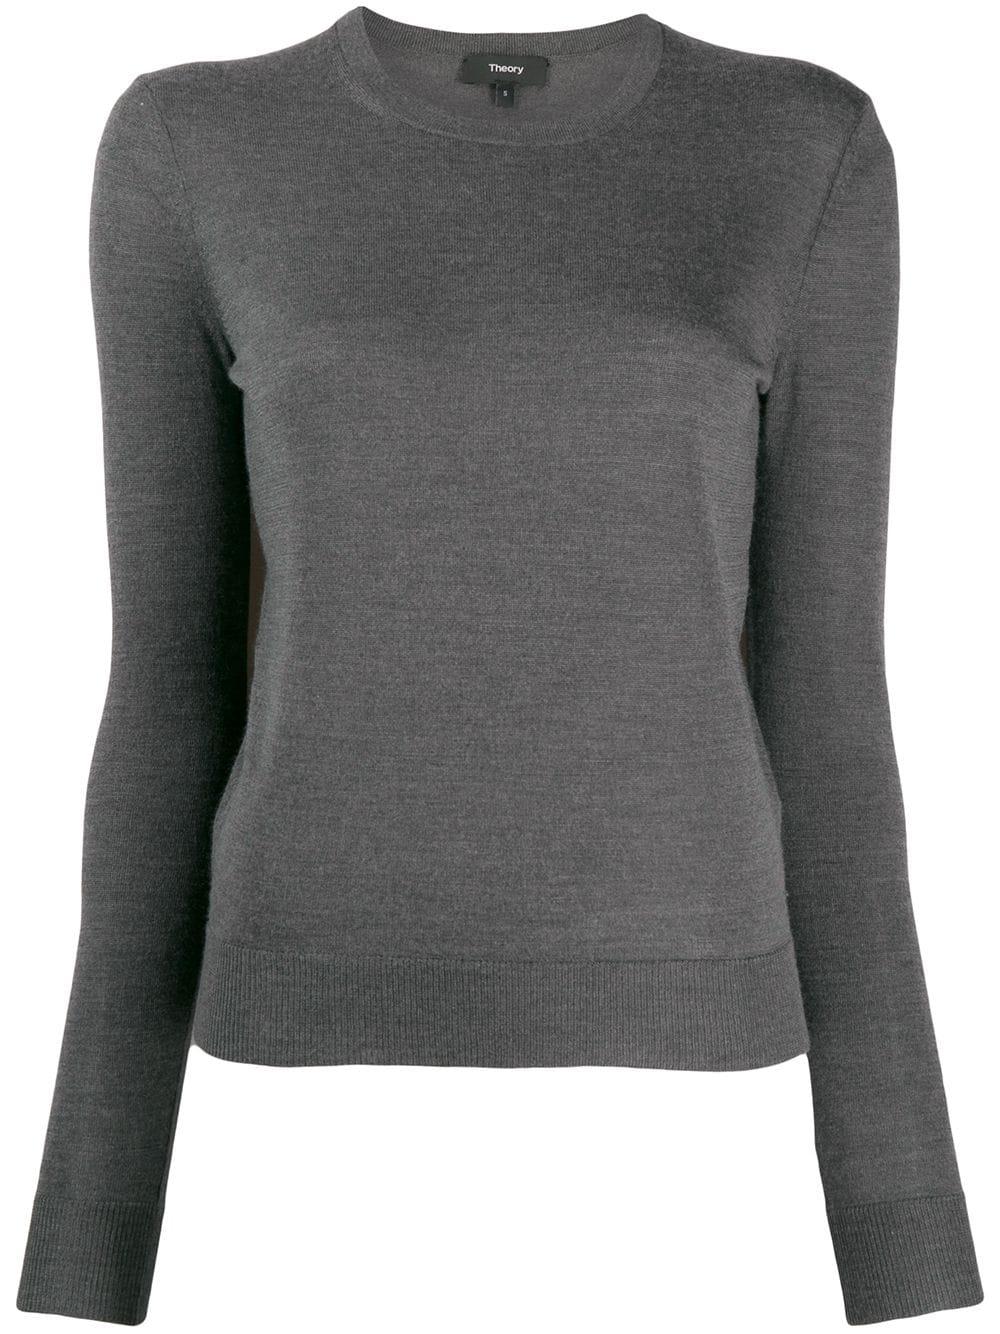 Theory Cashmere Crew Neck Sweatshirt in Grey (Gray) - Lyst